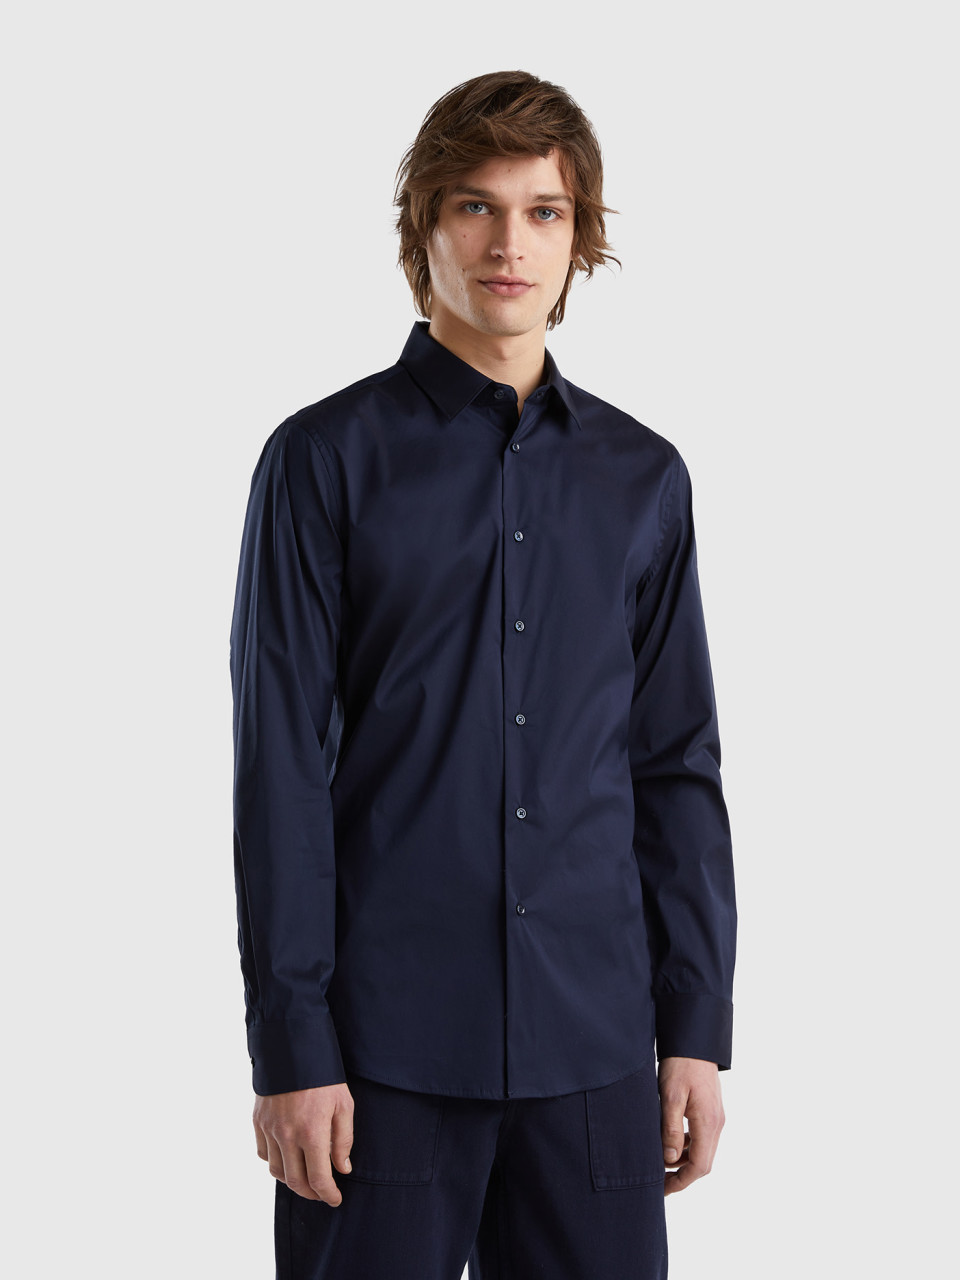 Benetton, Solid Color Slim Fit Shirt, Dark Blue, Men